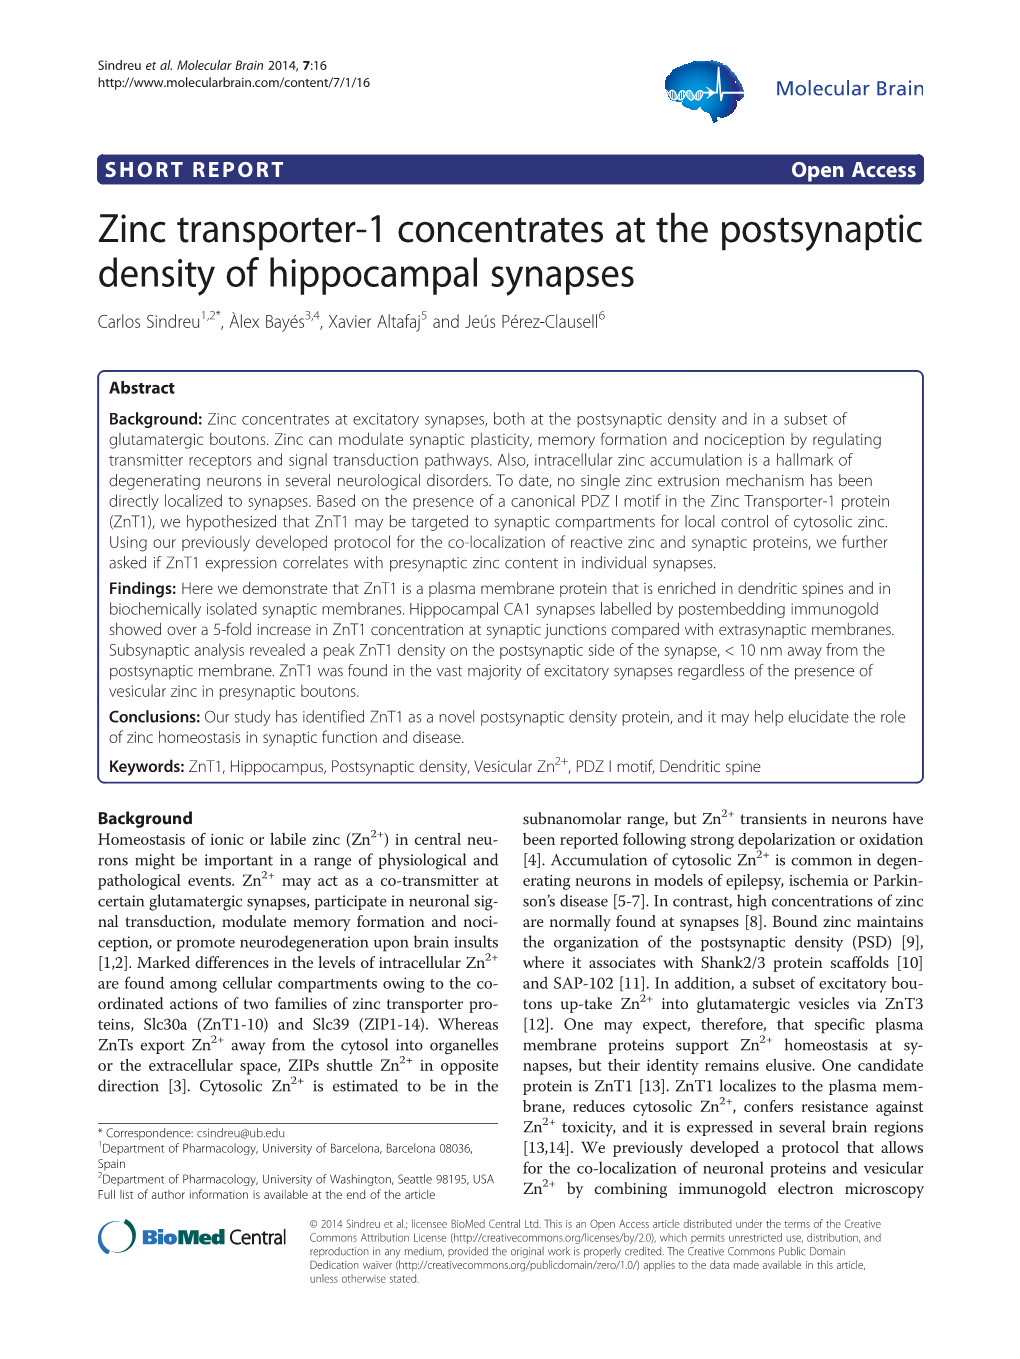 Zinc Transporter-1 Concentrates at the Postsynaptic Density of Hippocampal Synapses Carlos Sindreu1,2*, Àlex Bayés3,4, Xavier Altafaj5 and Jeús Pérez-Clausell6